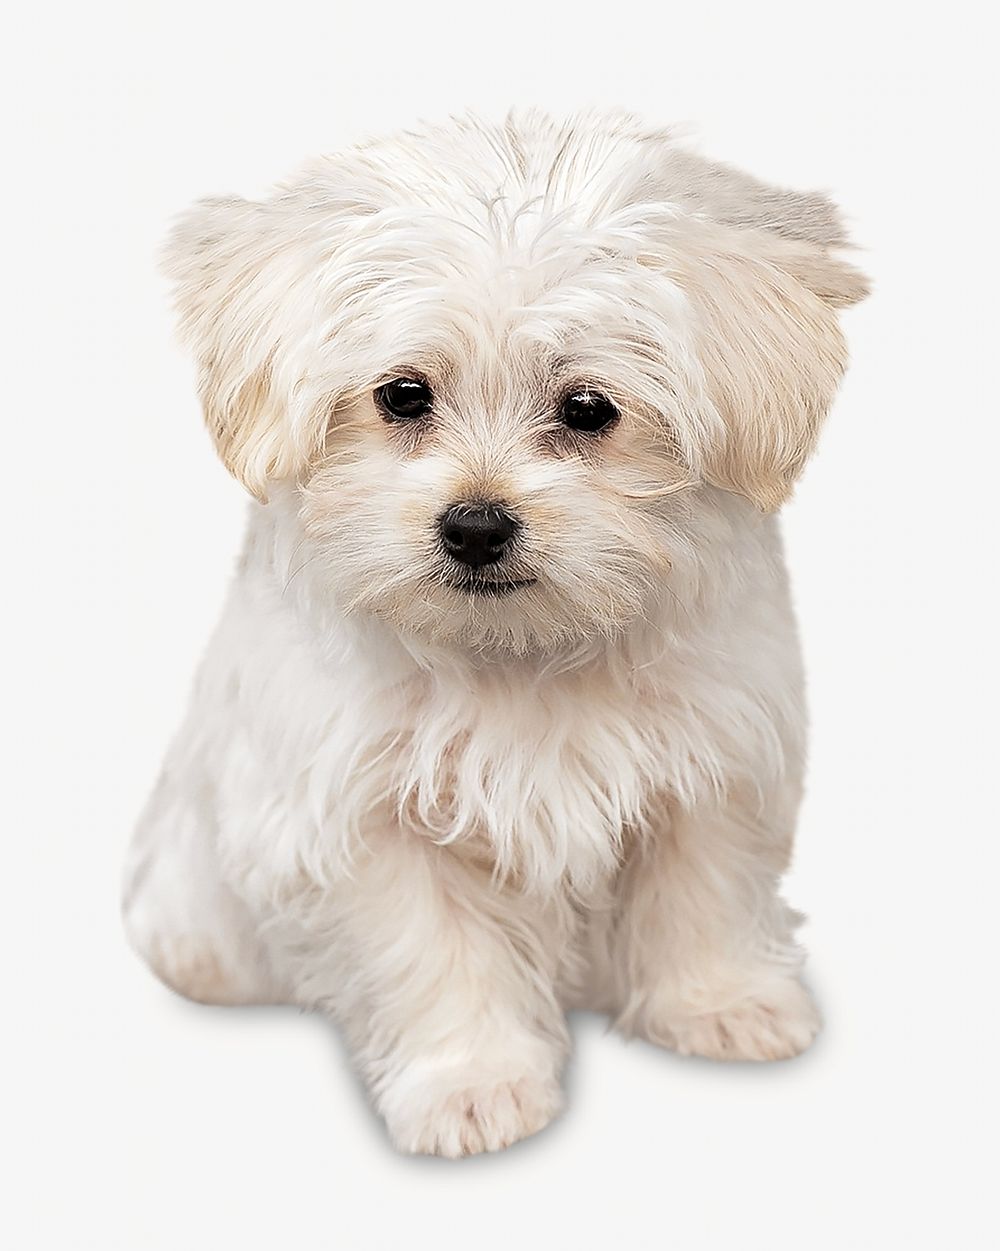 Maltese puppy image on white